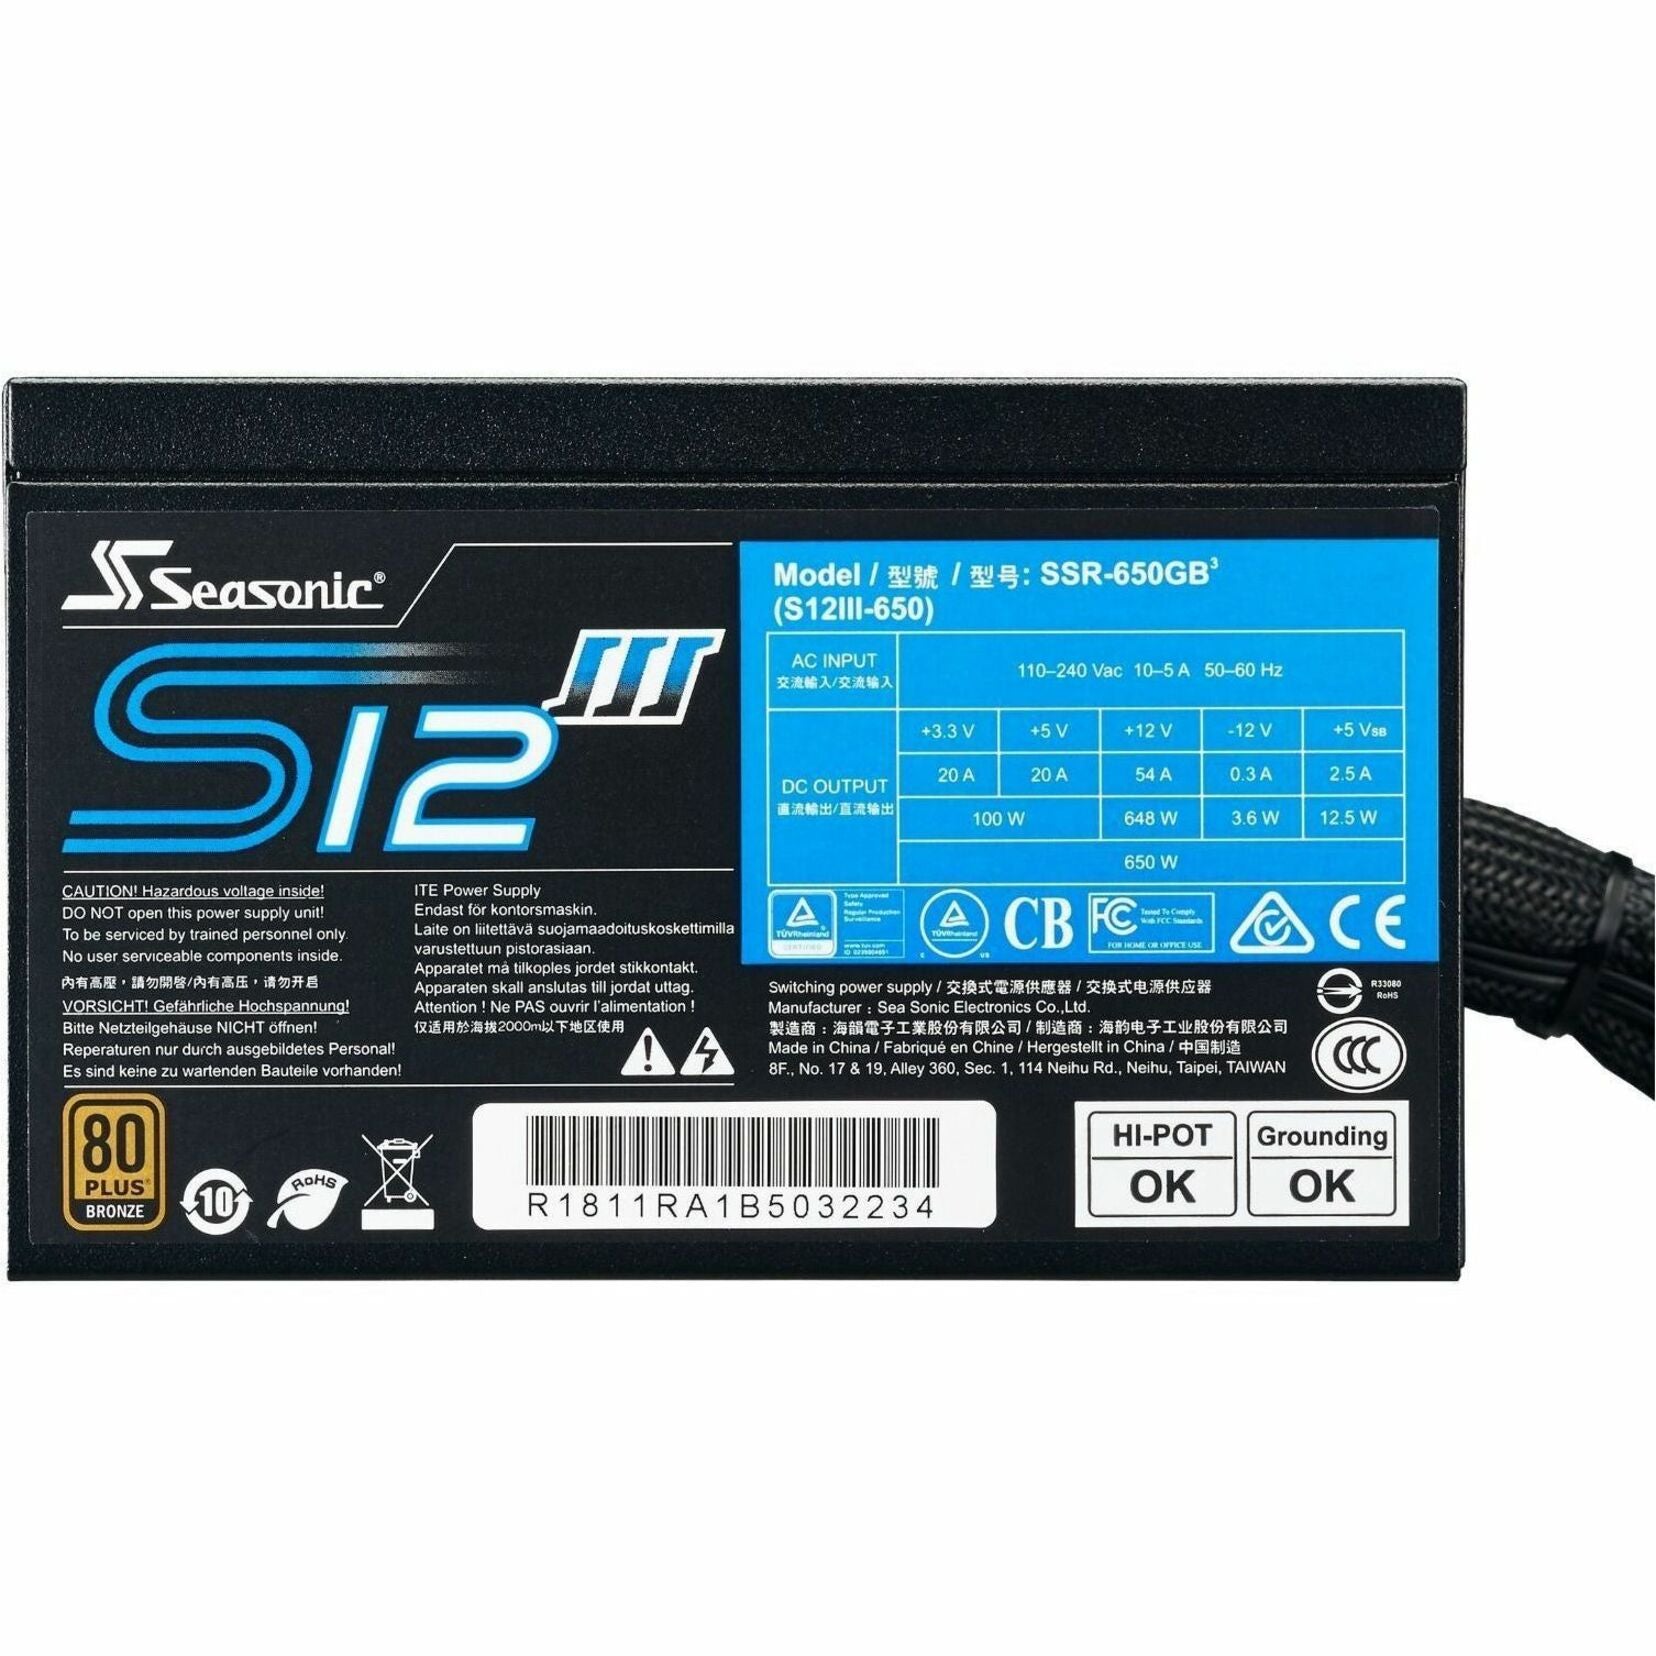 Seasonic S12III 650W Power Supply (SSR-650GB3)